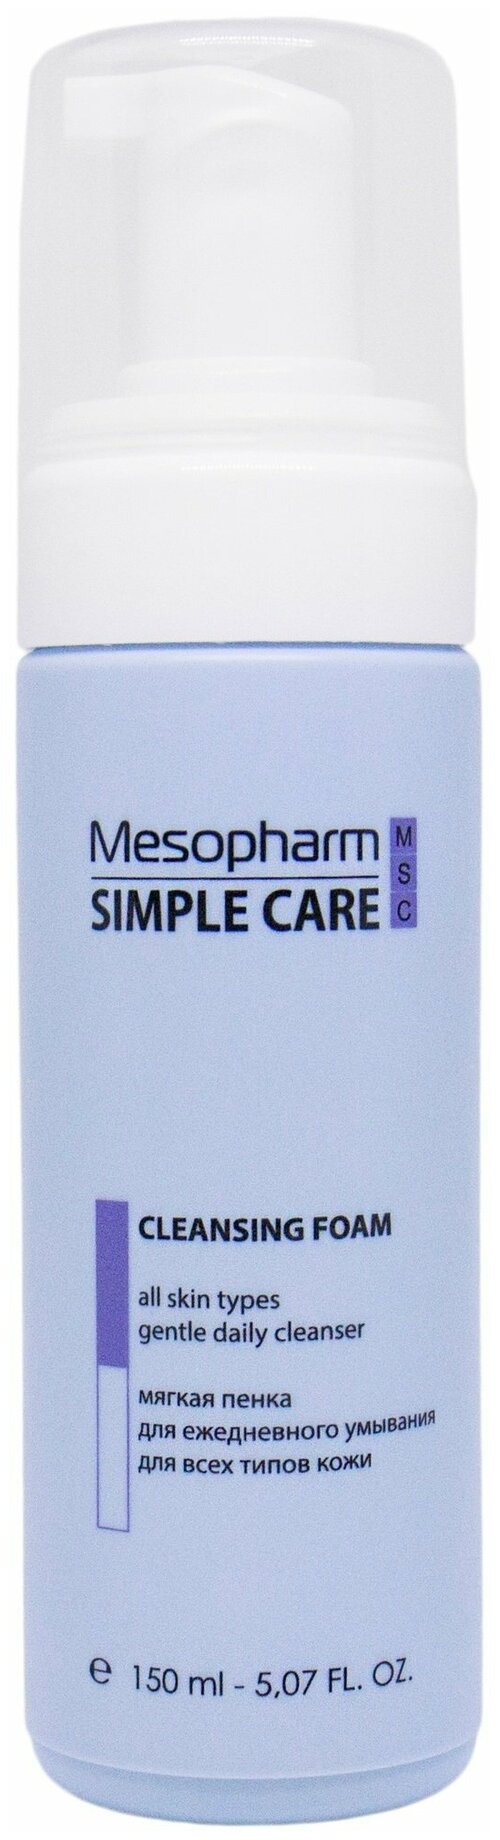 Mesopharm пенка для ежедневного умывания  Cleansing Foam Simple Care, 150 мл, 150 г